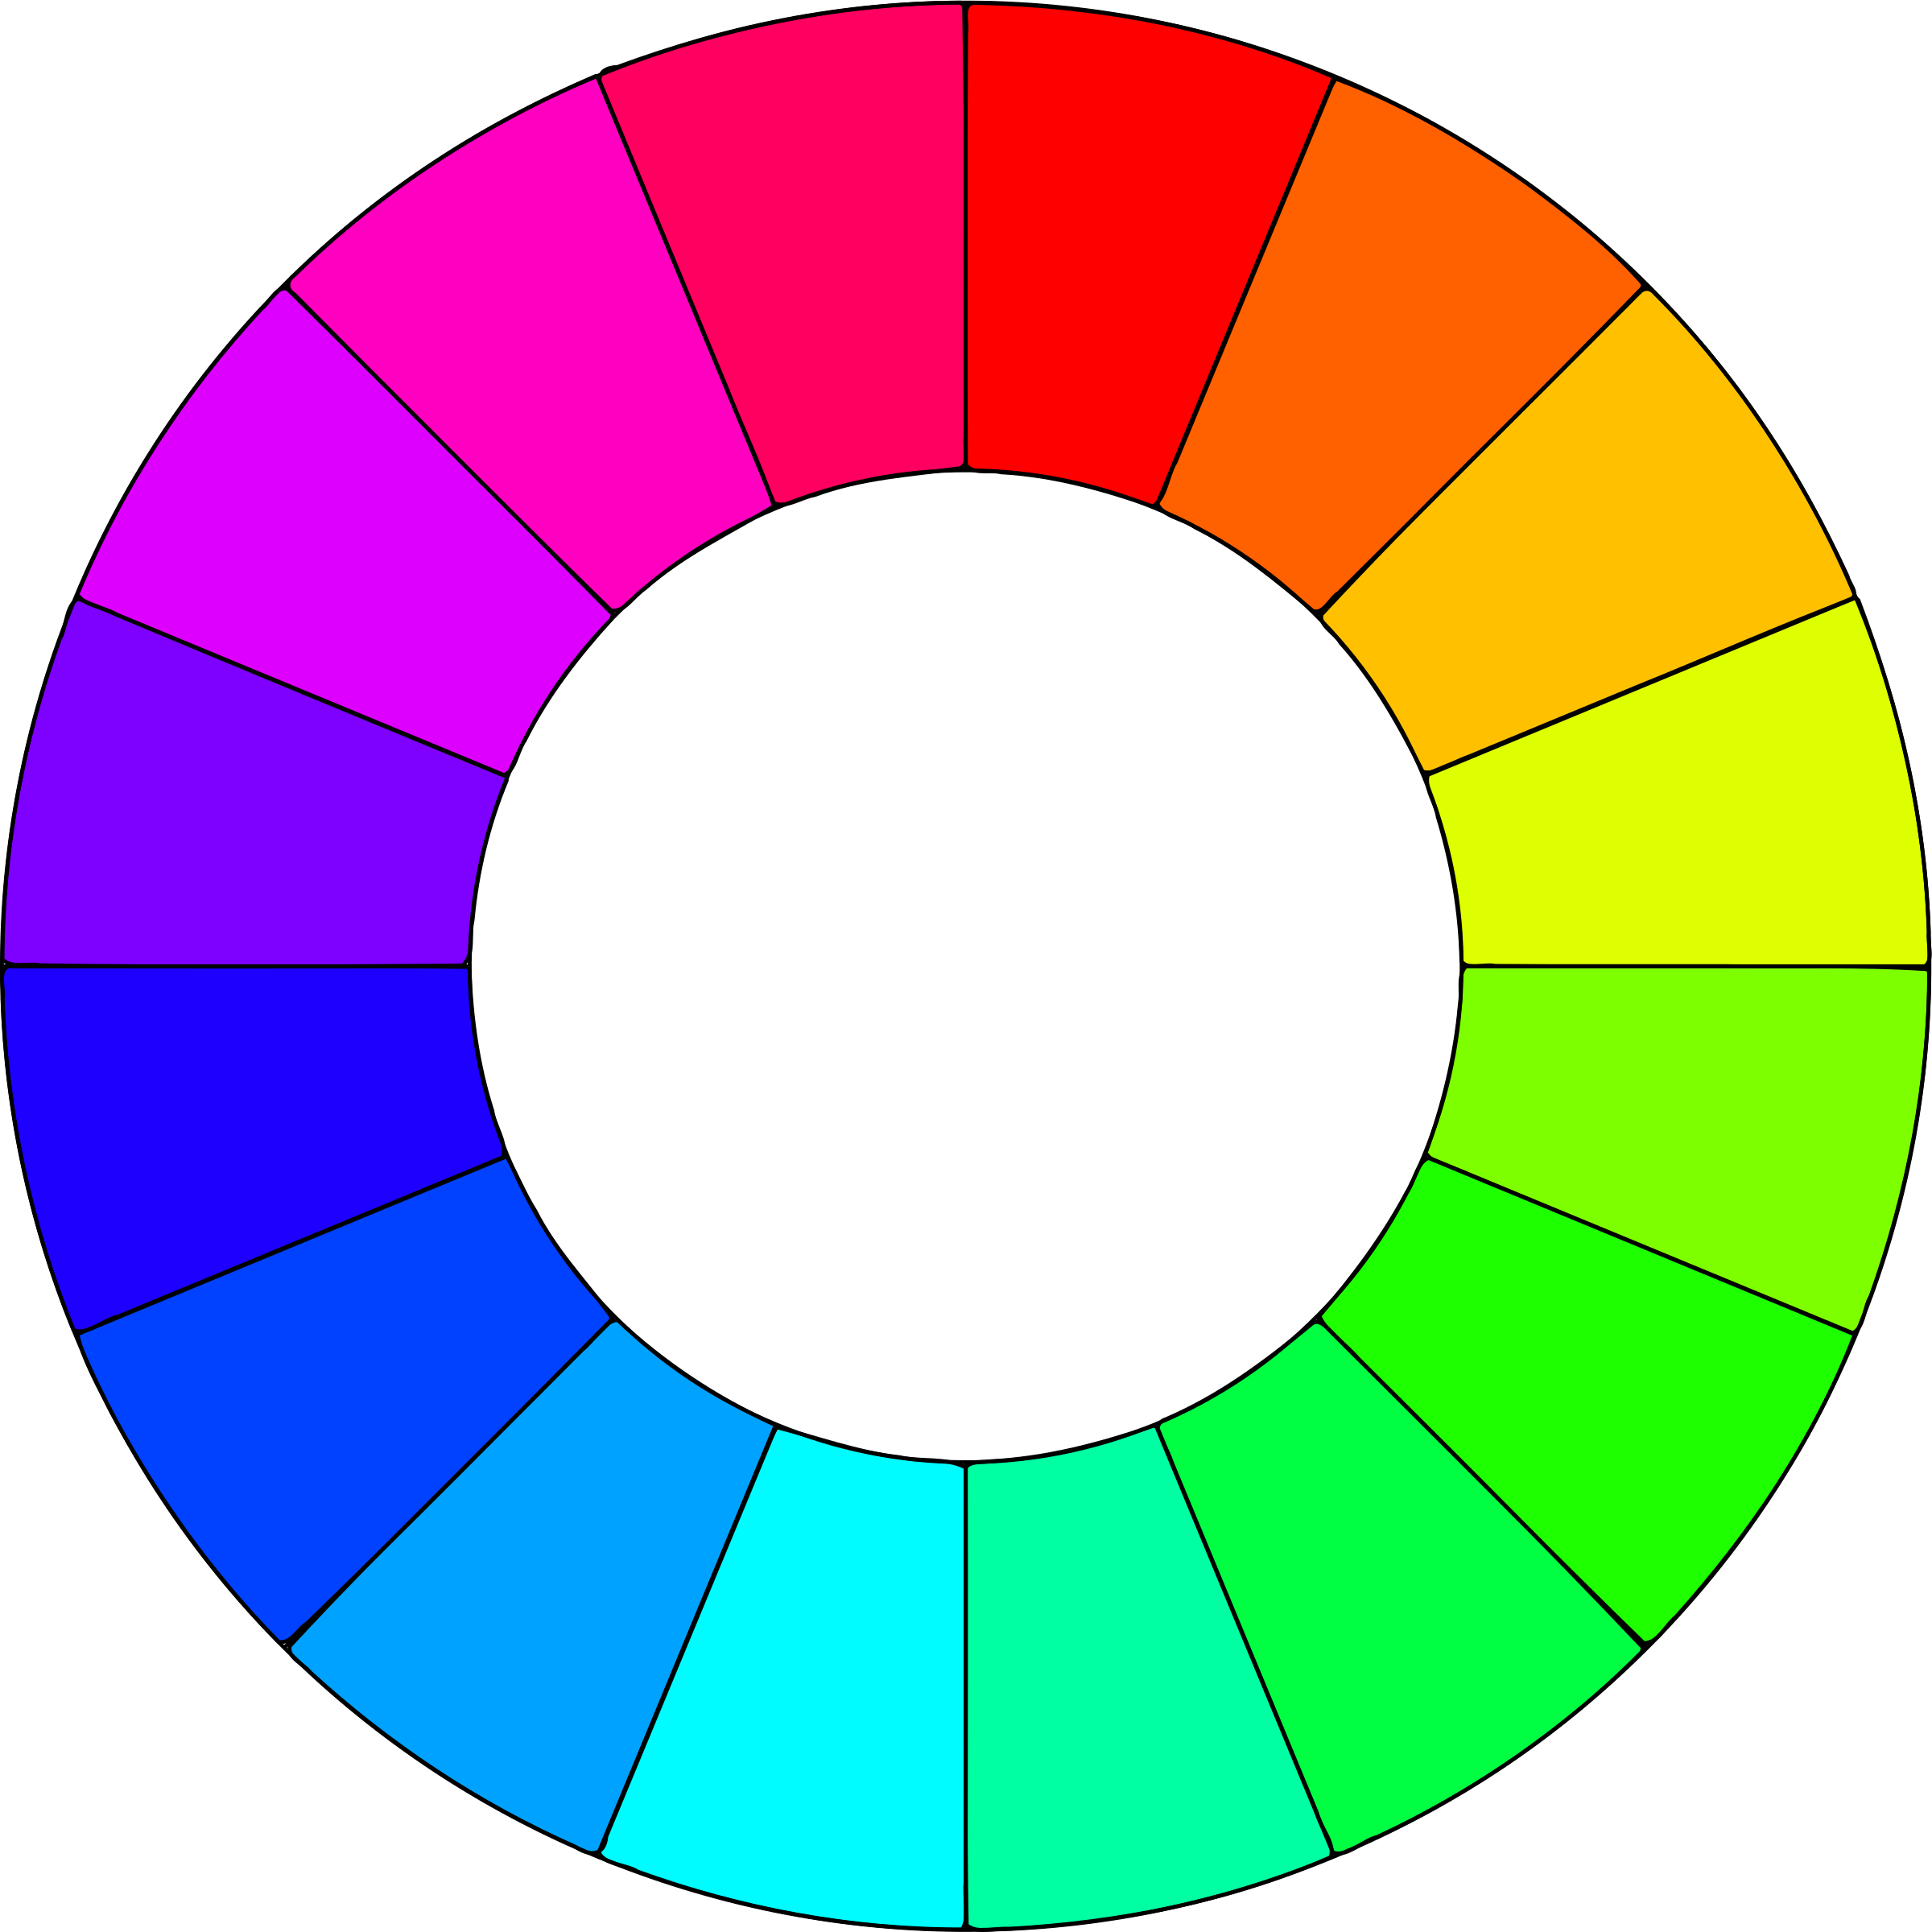 Color round. Цветовой круг. Цветовая палитра круг. Цветной круг. Палитра цветов цветовой круг.